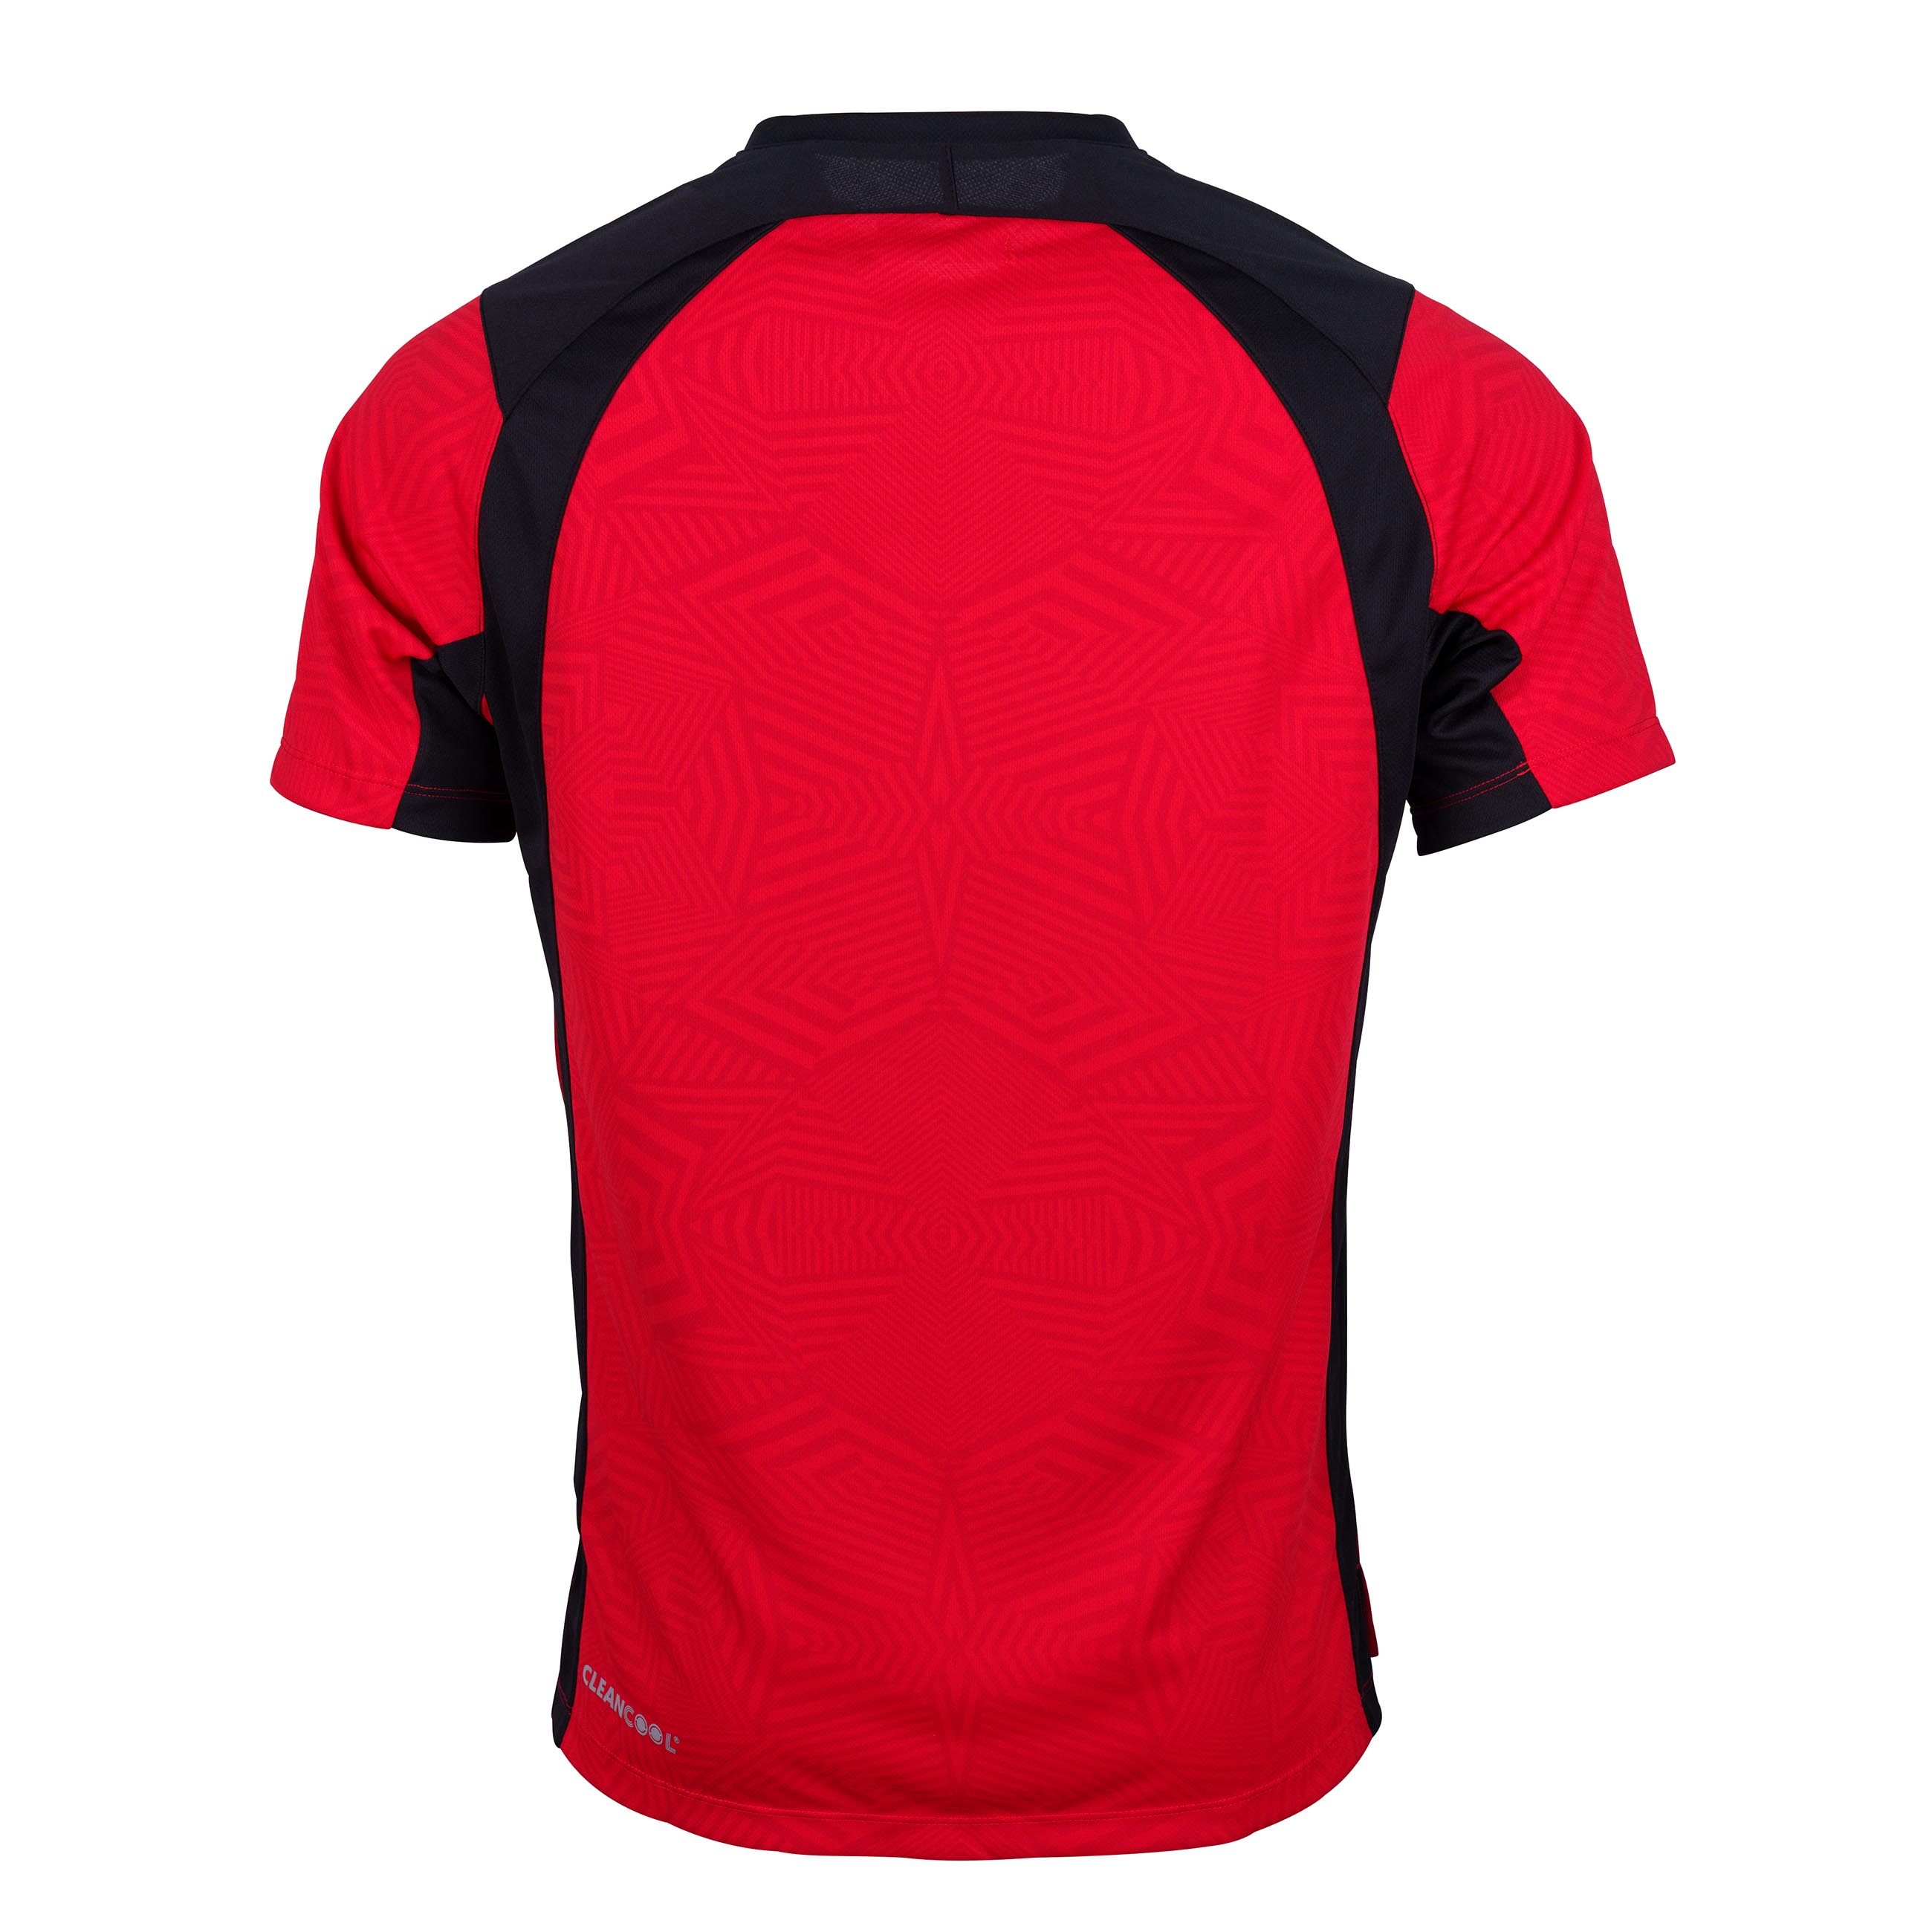 Pro T20 Short Sleeve Adult Shirt